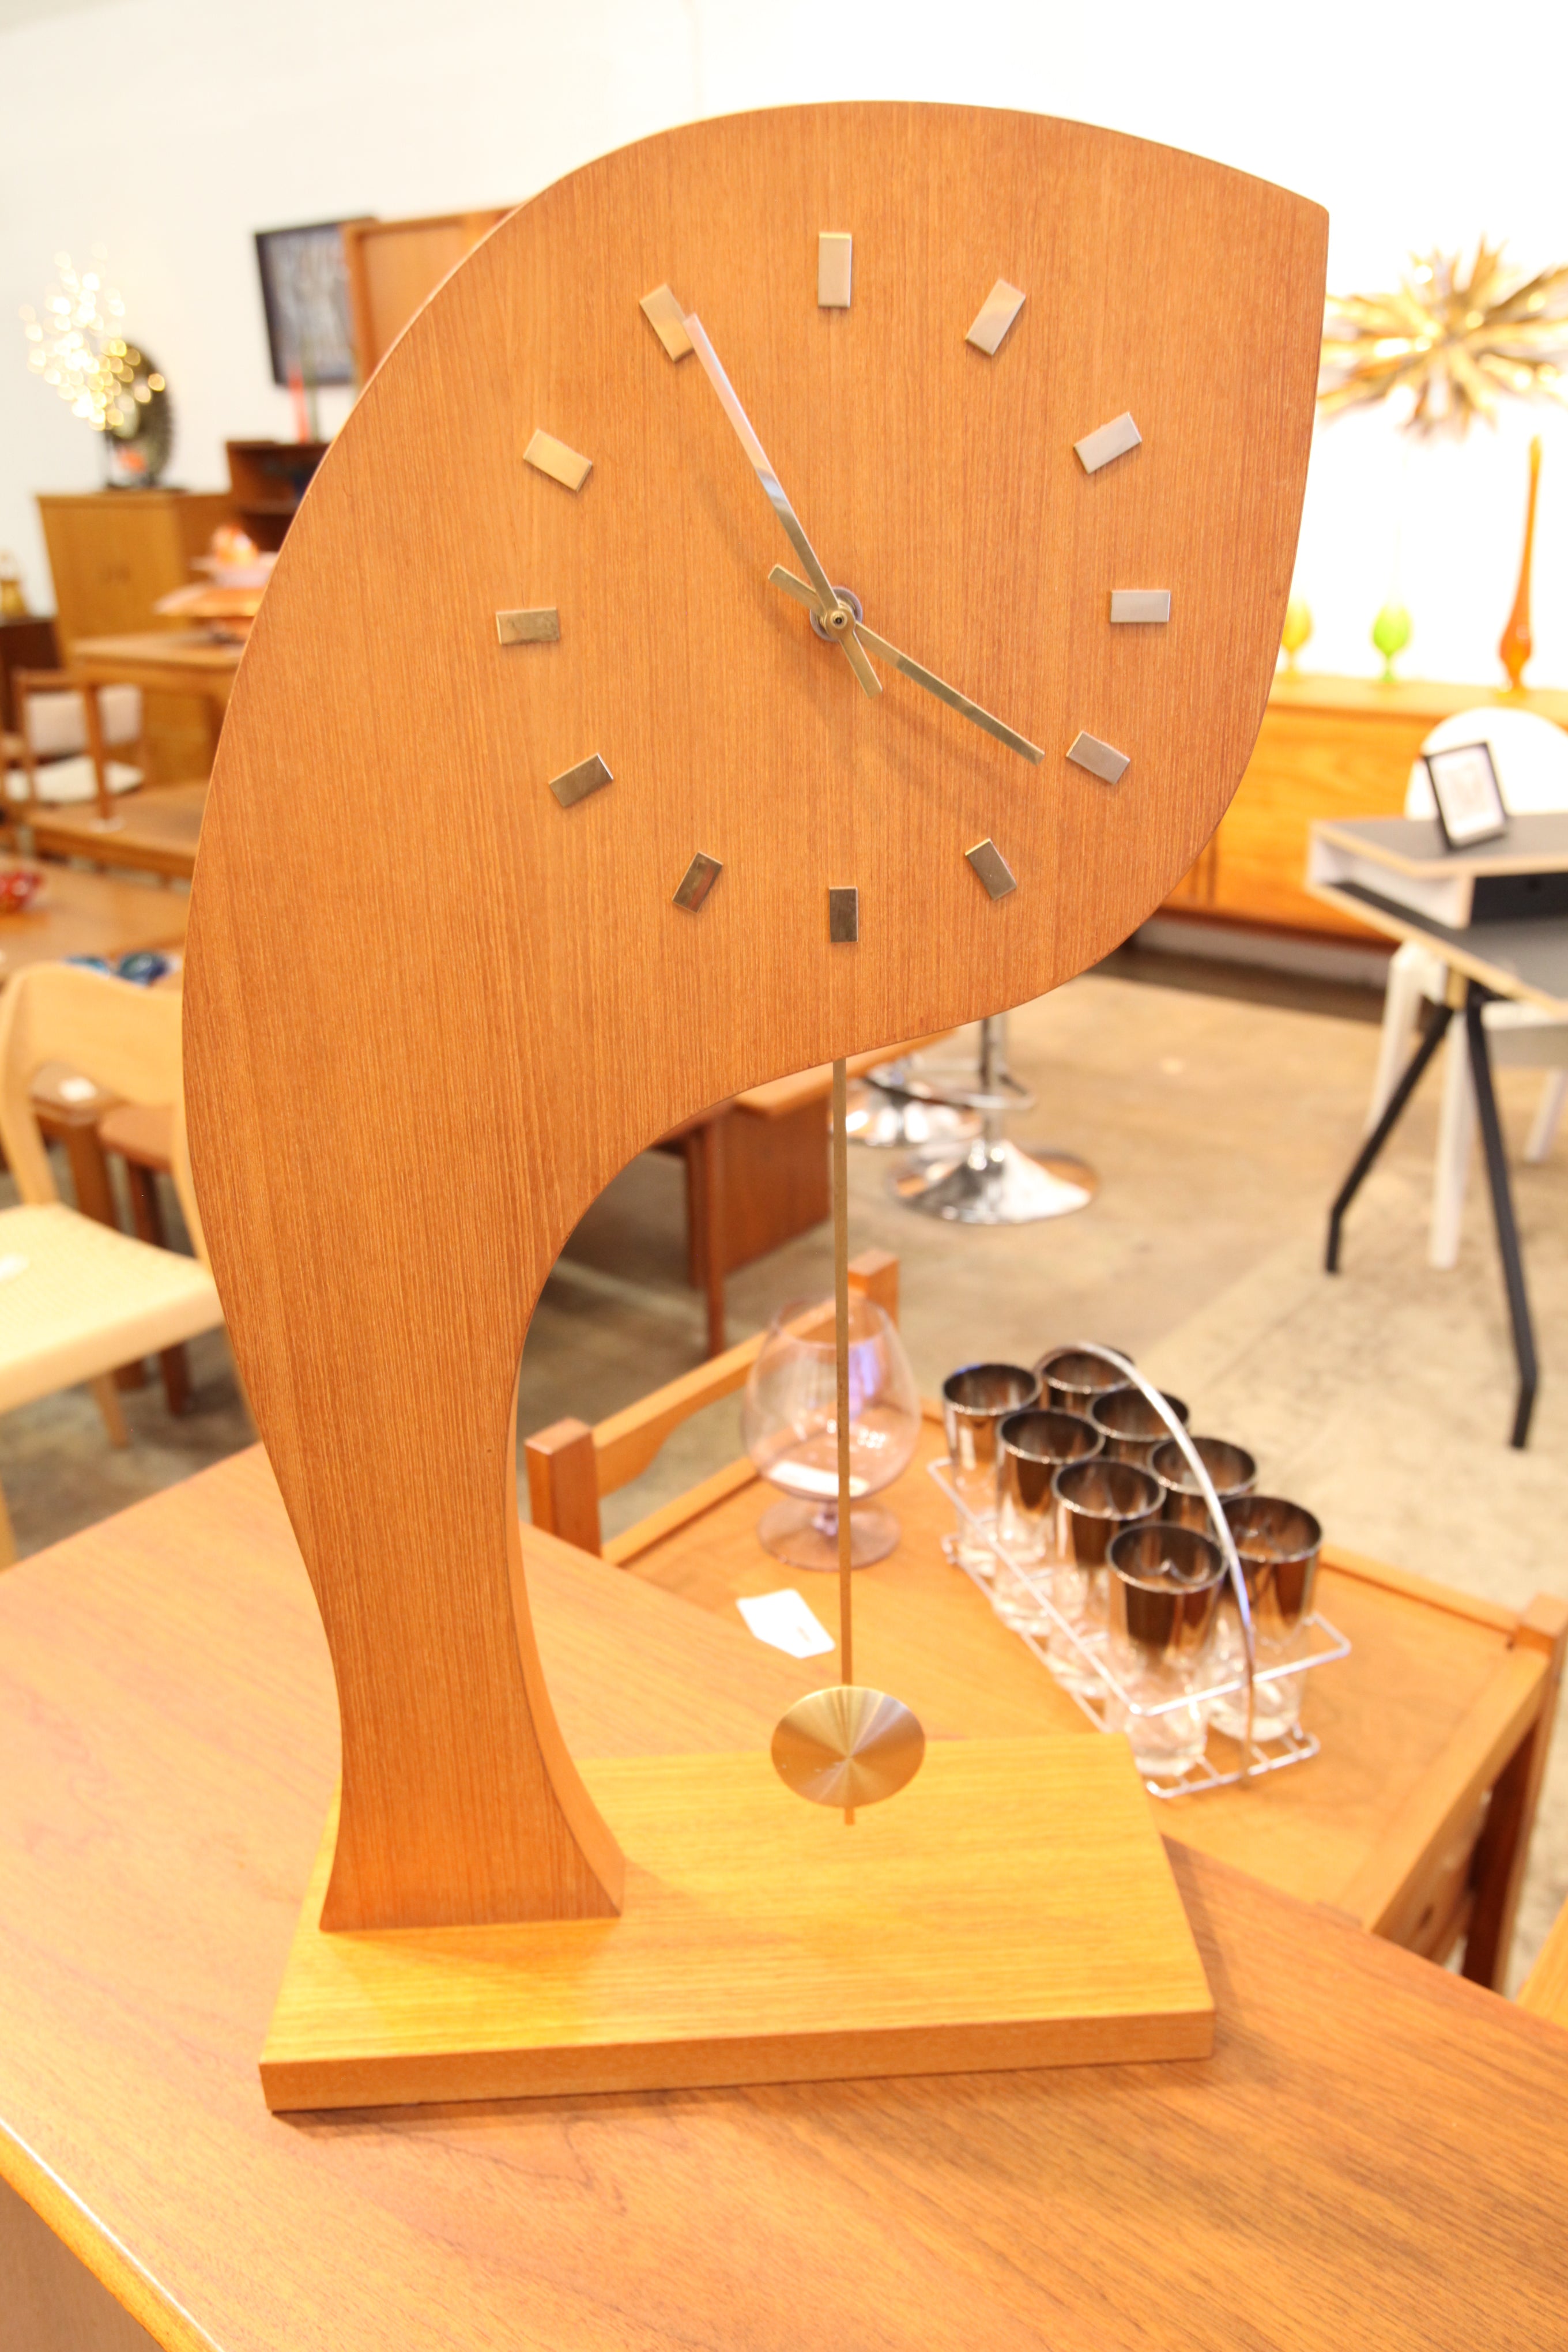 Vintage Teak Pendulum Clock by RS Associates Montreal (29.5"H- Base 16" x 7")